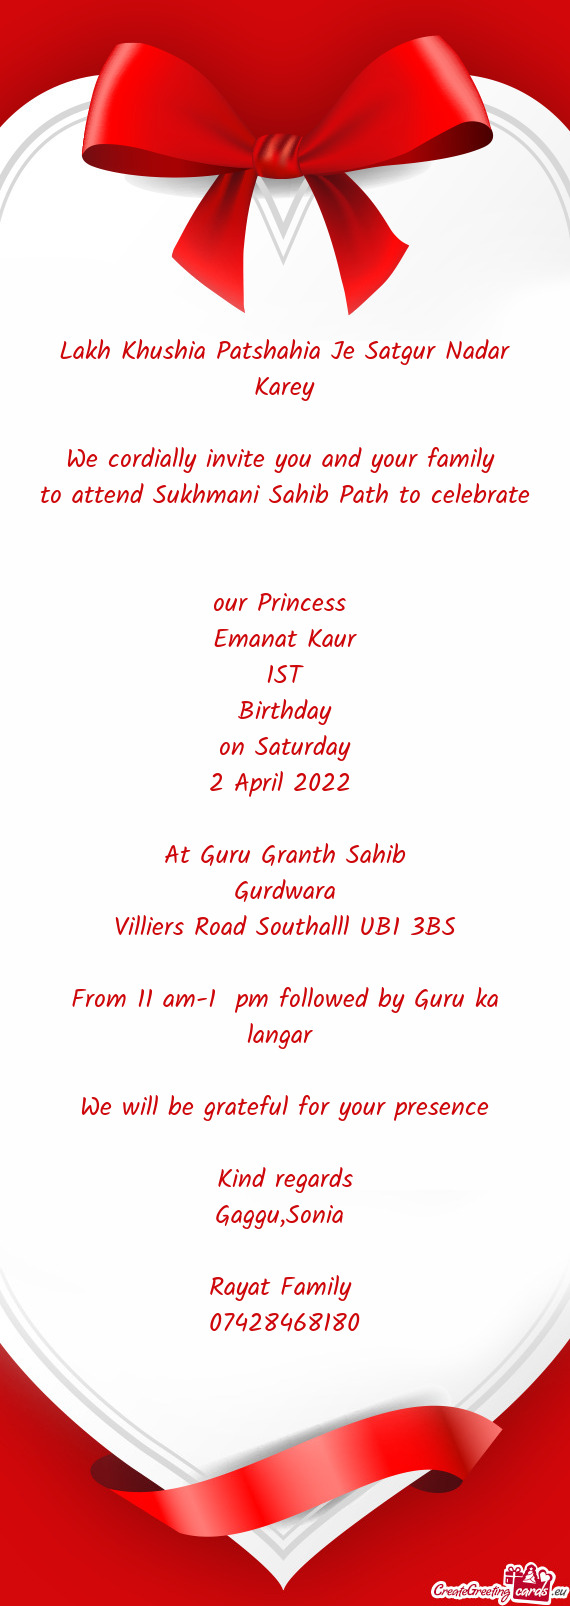 Sukhmani Sahib Path to celebrate 
 our Princess 
 Emanat Kaur
 1ST
 Birthday
 on Saturday 
 2 April